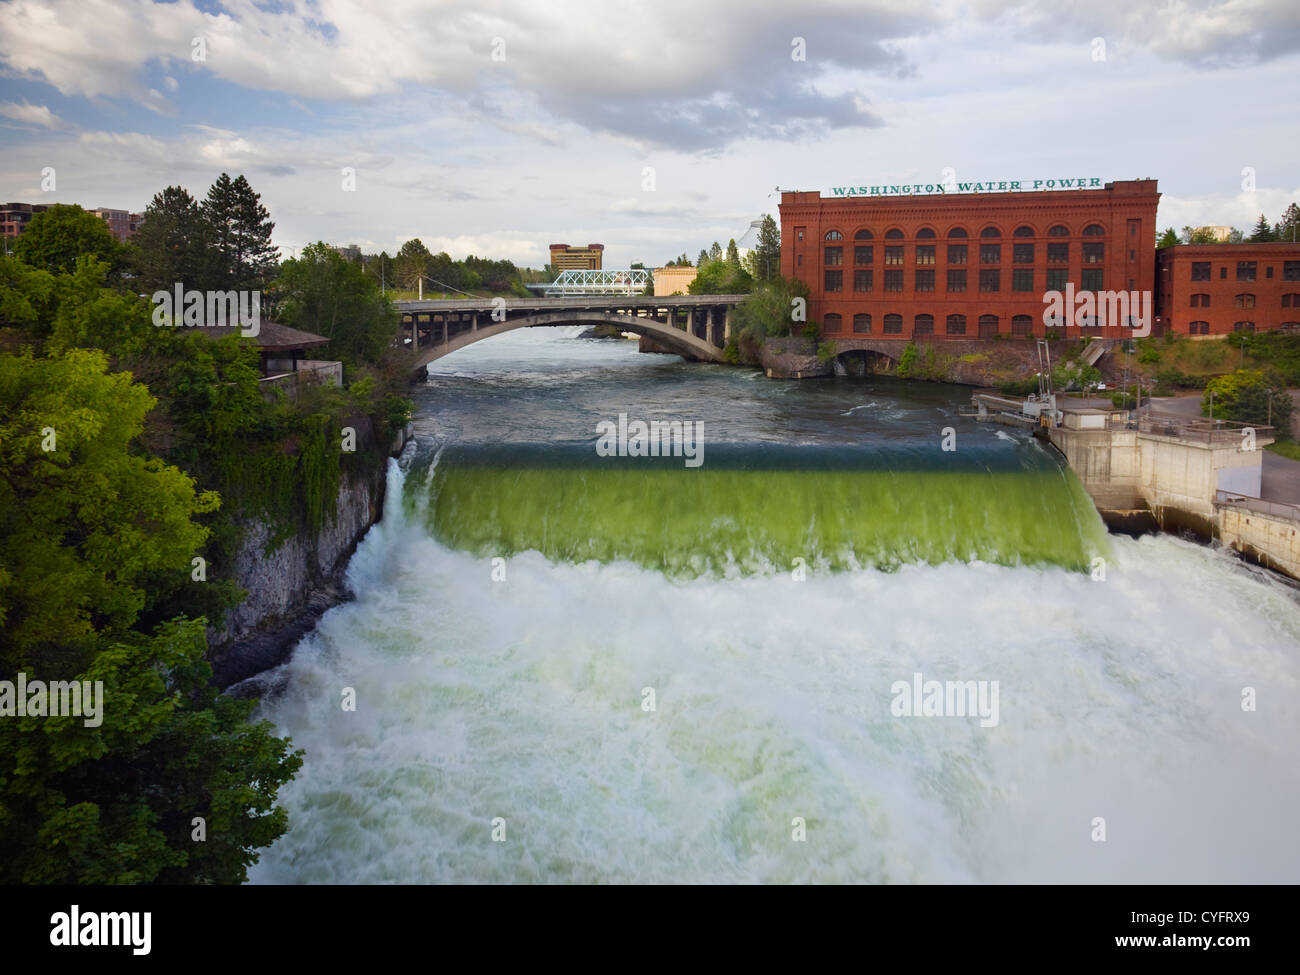 WASHINGTON - The Spokane River thundering through Riverfront Park and pass the Washington Water Power plant in downtown Spokane. Stock Photo